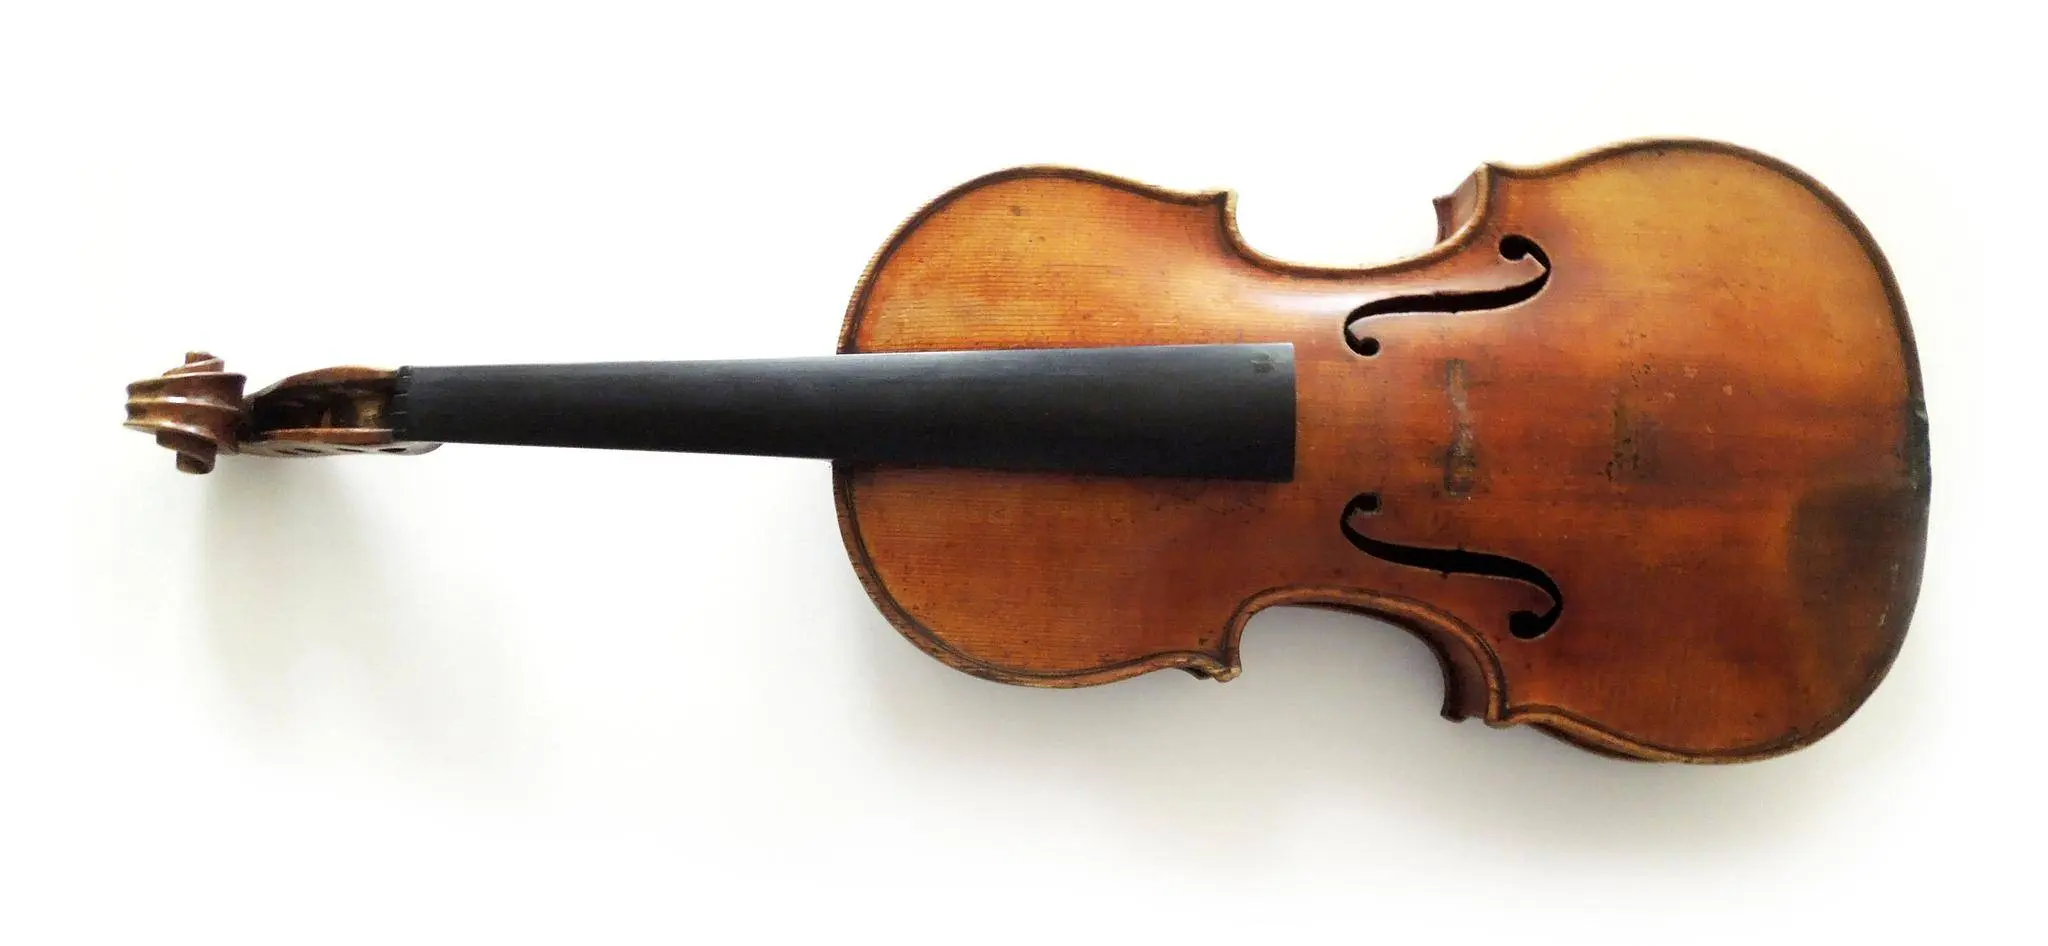 list of stradivarius violins - Which is the best Stradivarius violin